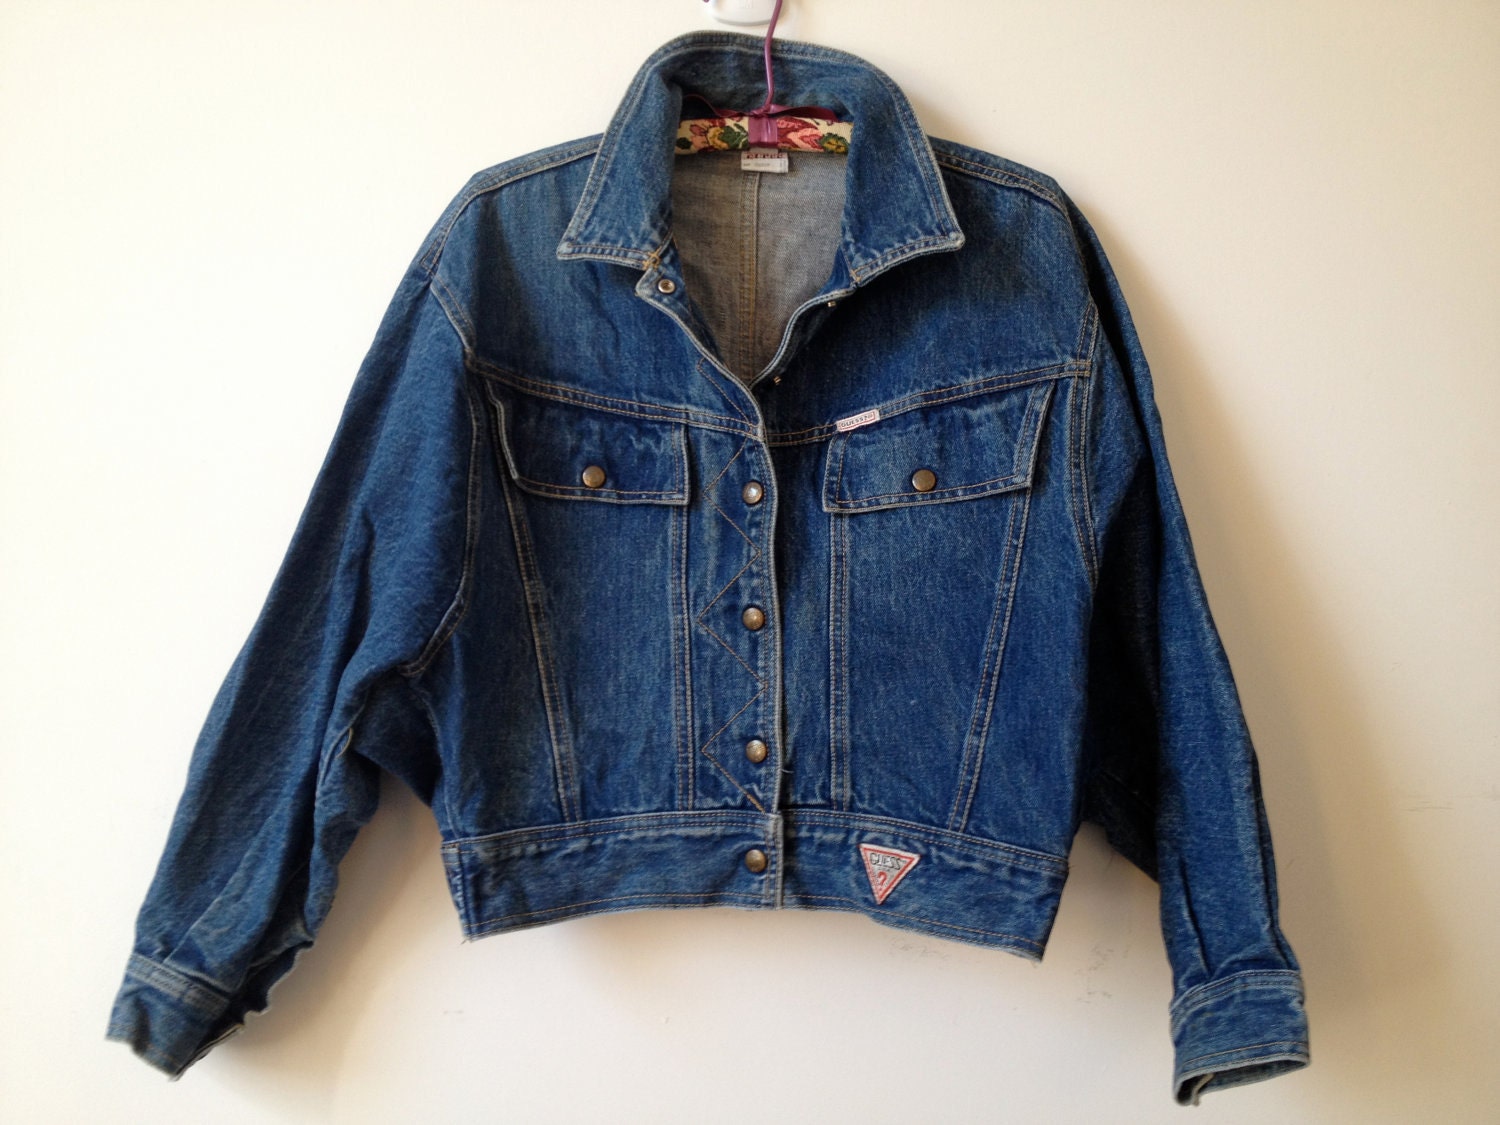  vintage 80s guess denim jean jacket medium large